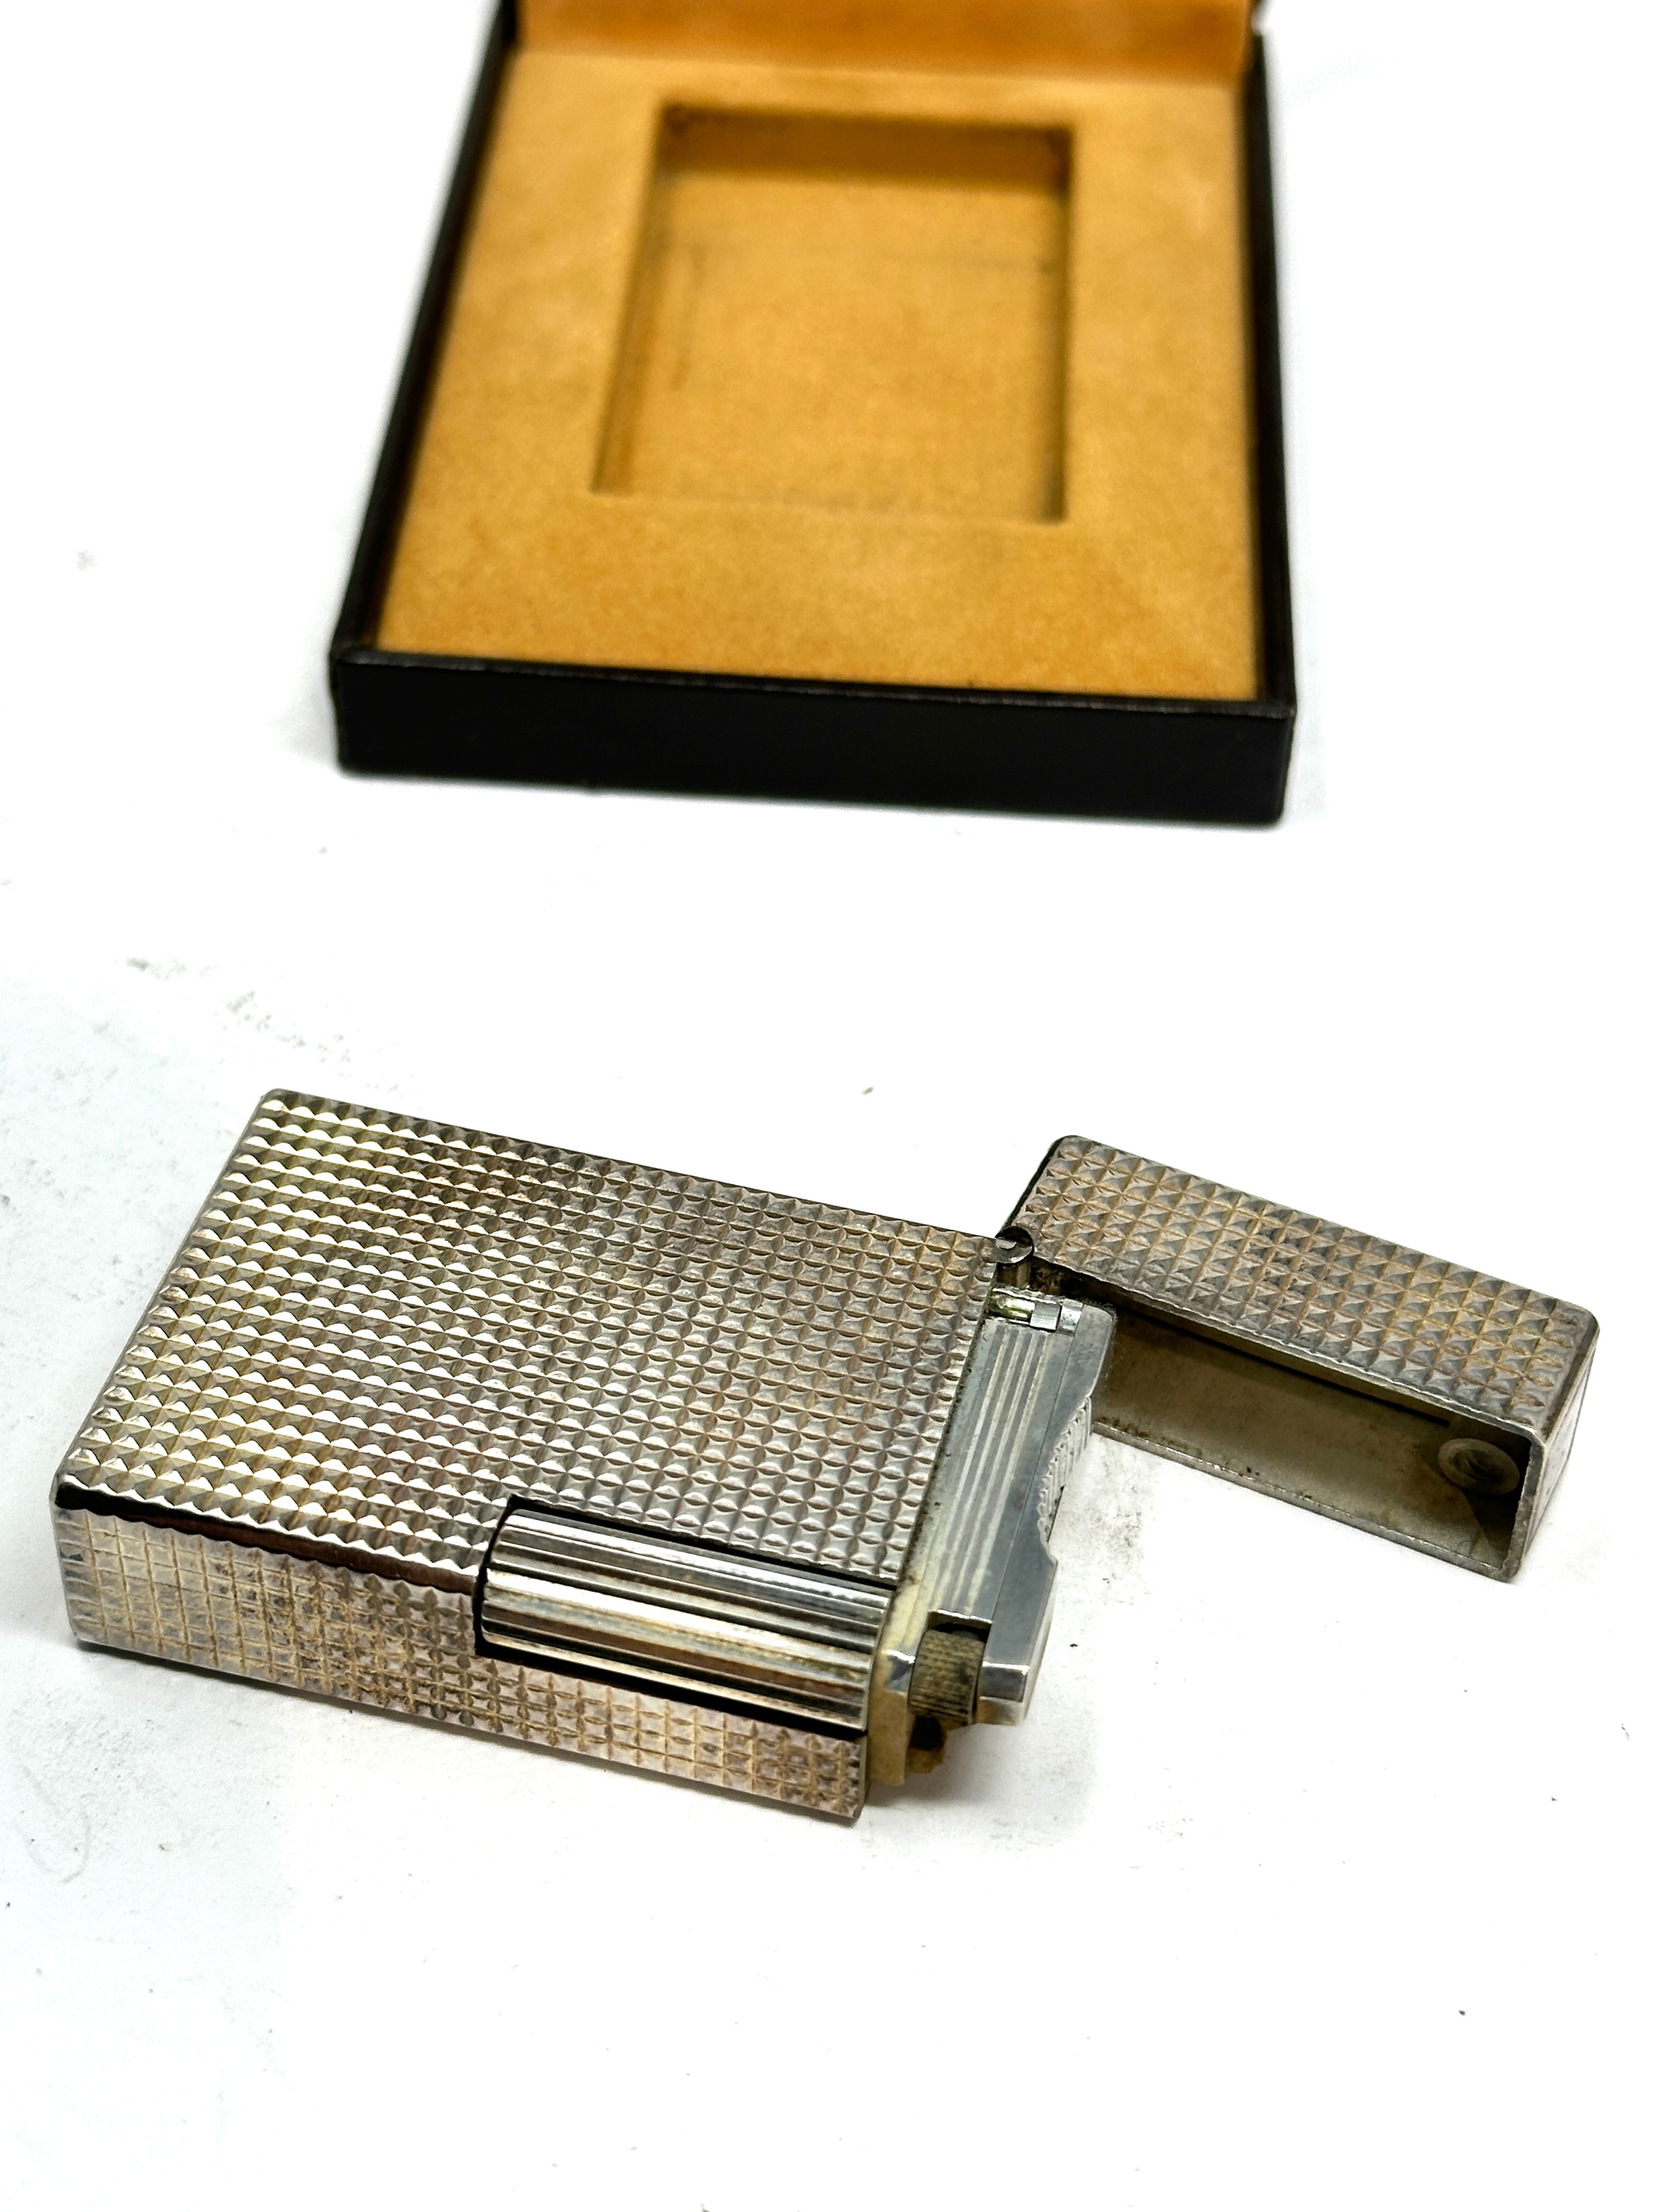 Boxed dupont cigarette lighter - Image 5 of 6